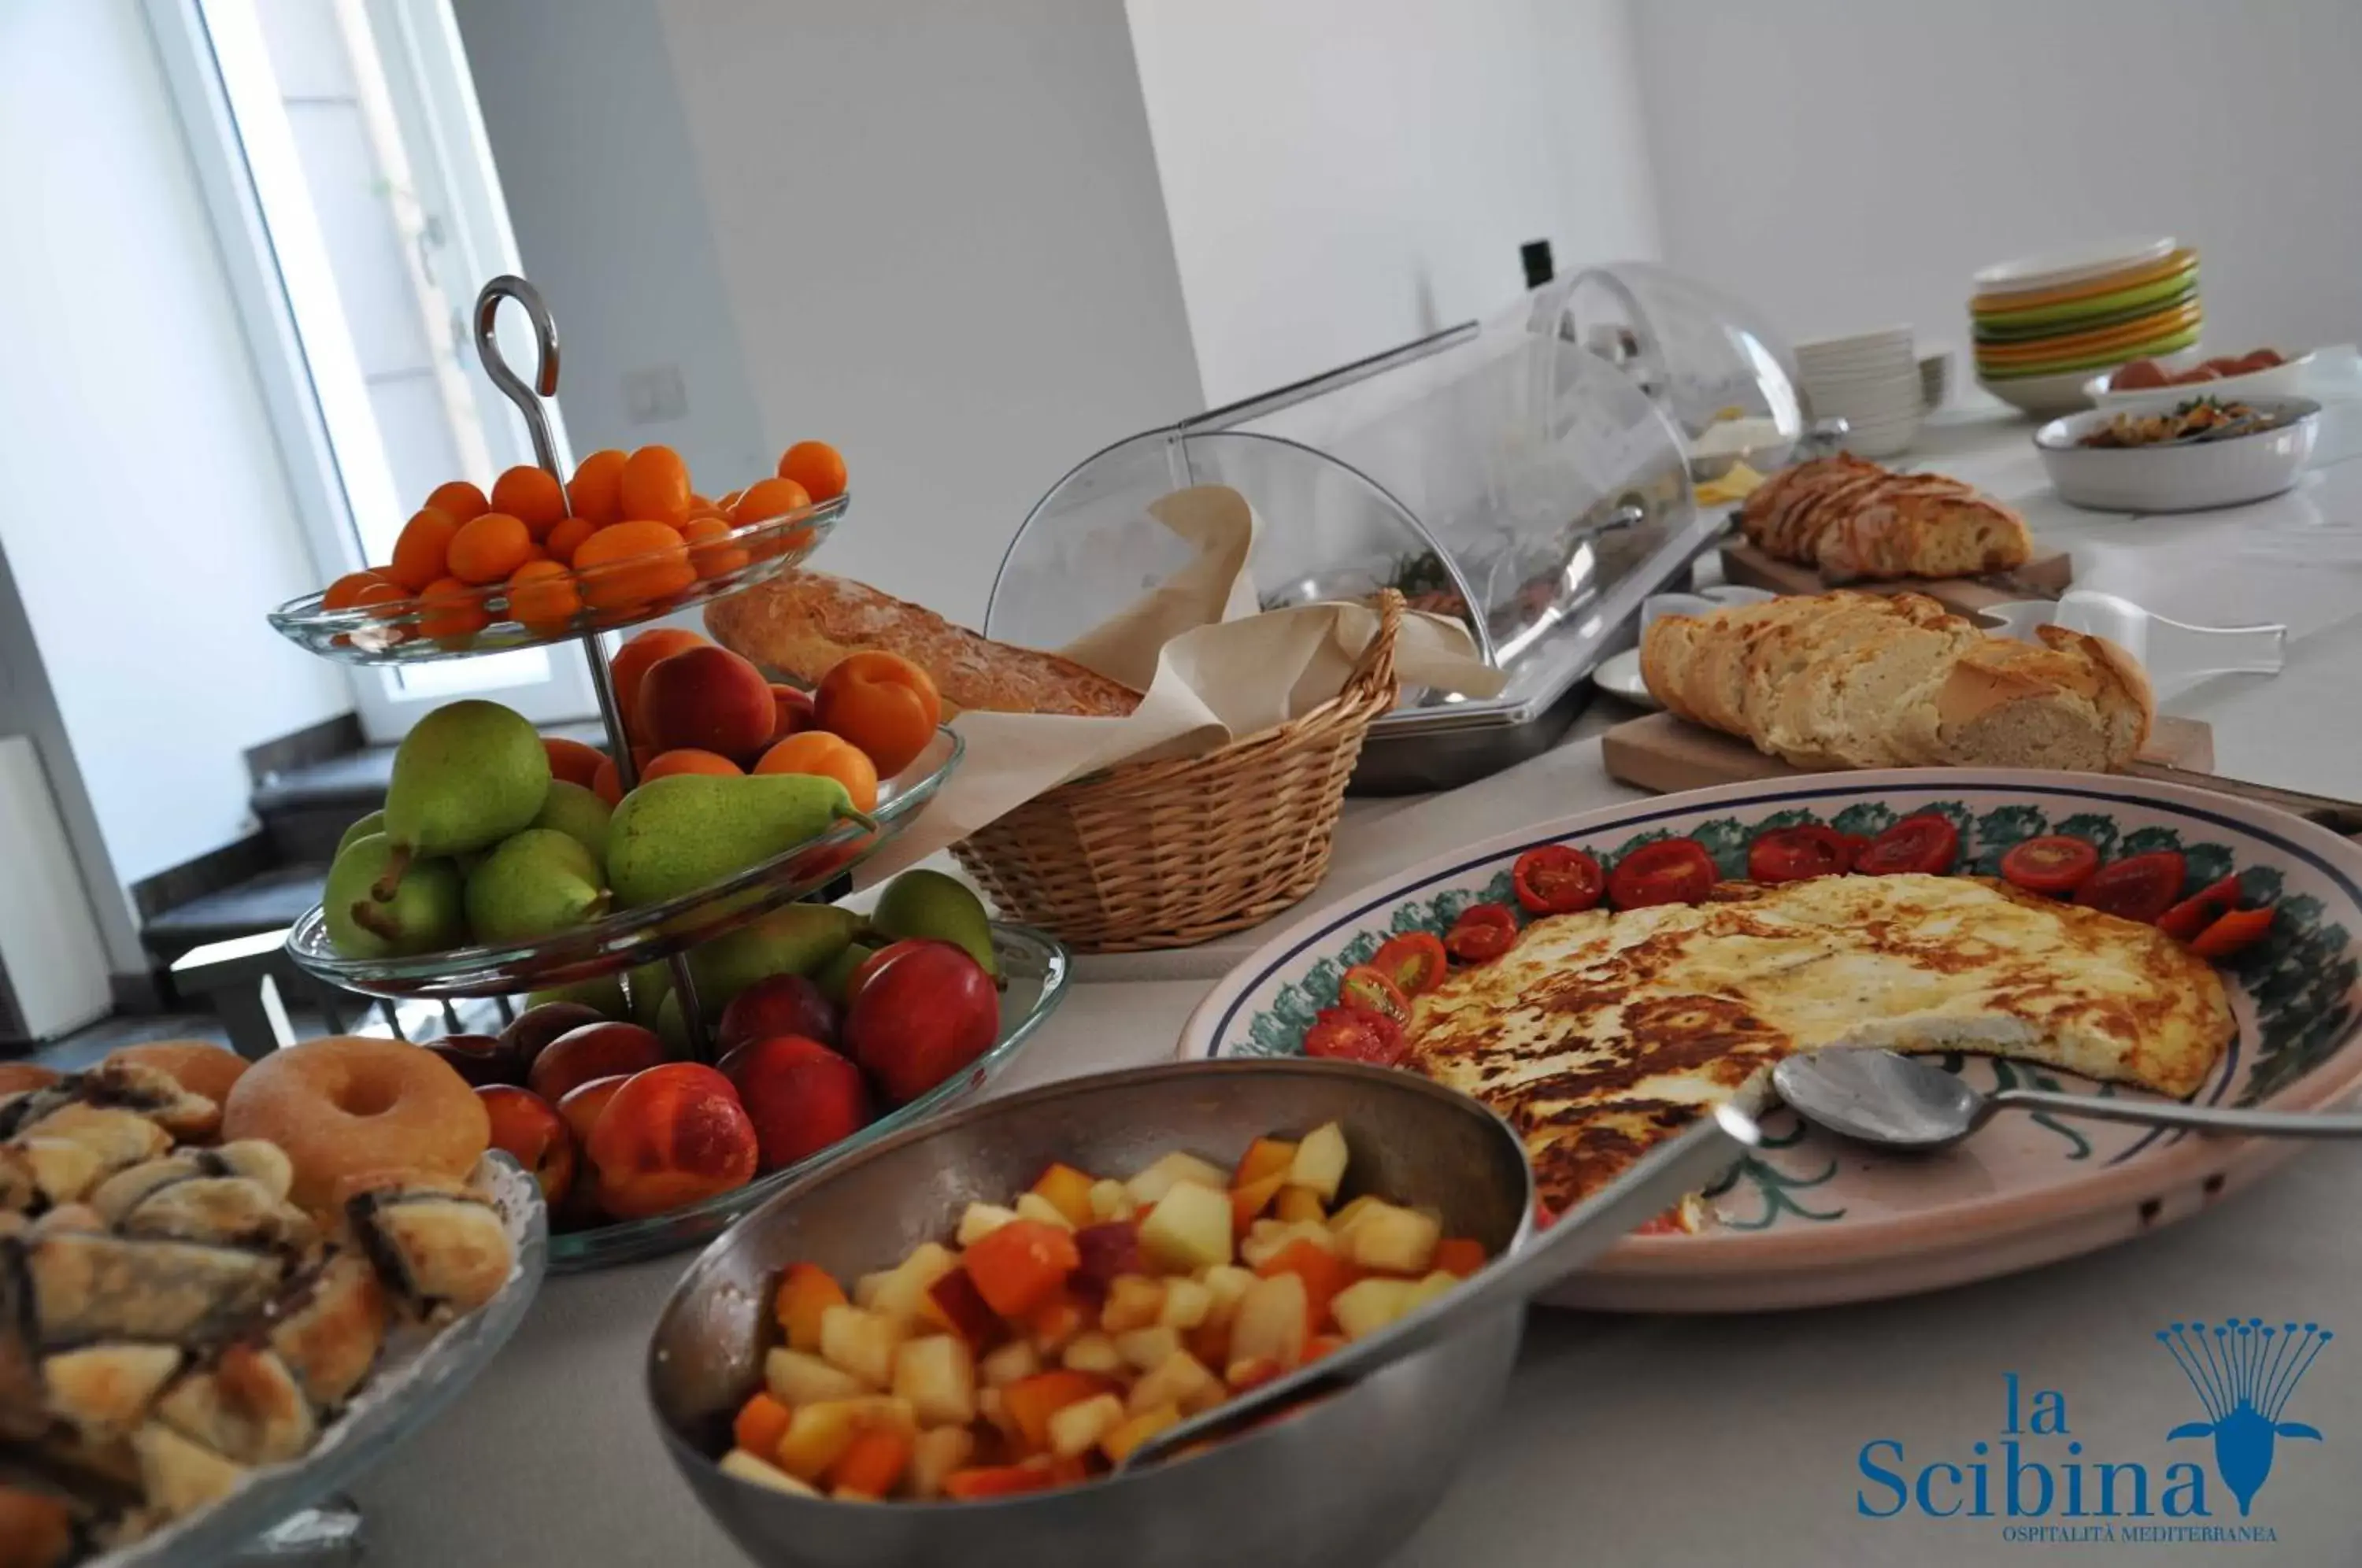 Continental breakfast in La Scibina